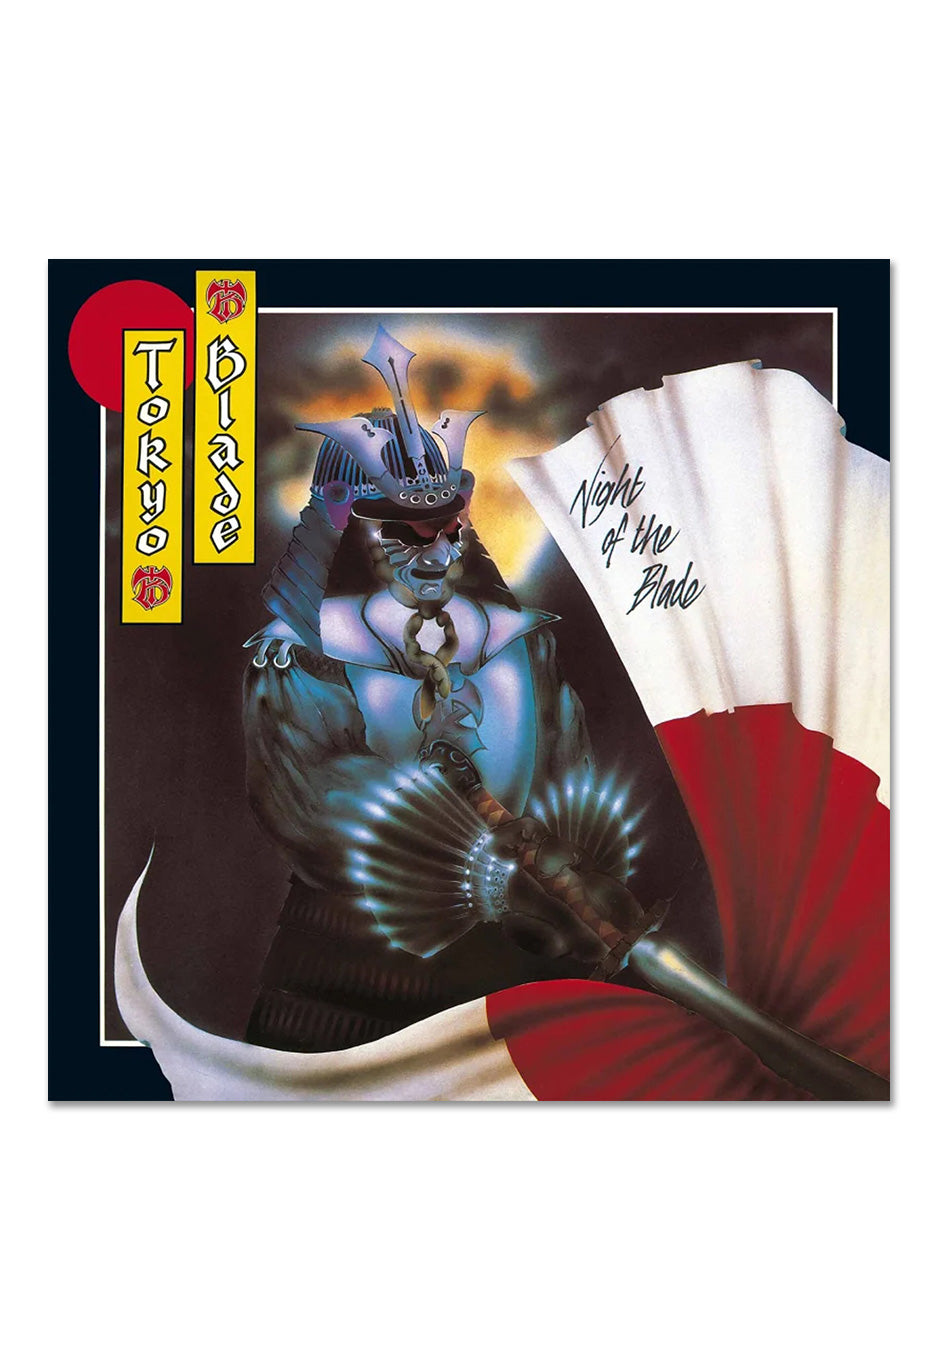 Tokyo Blade - Night Of The Blade - CD